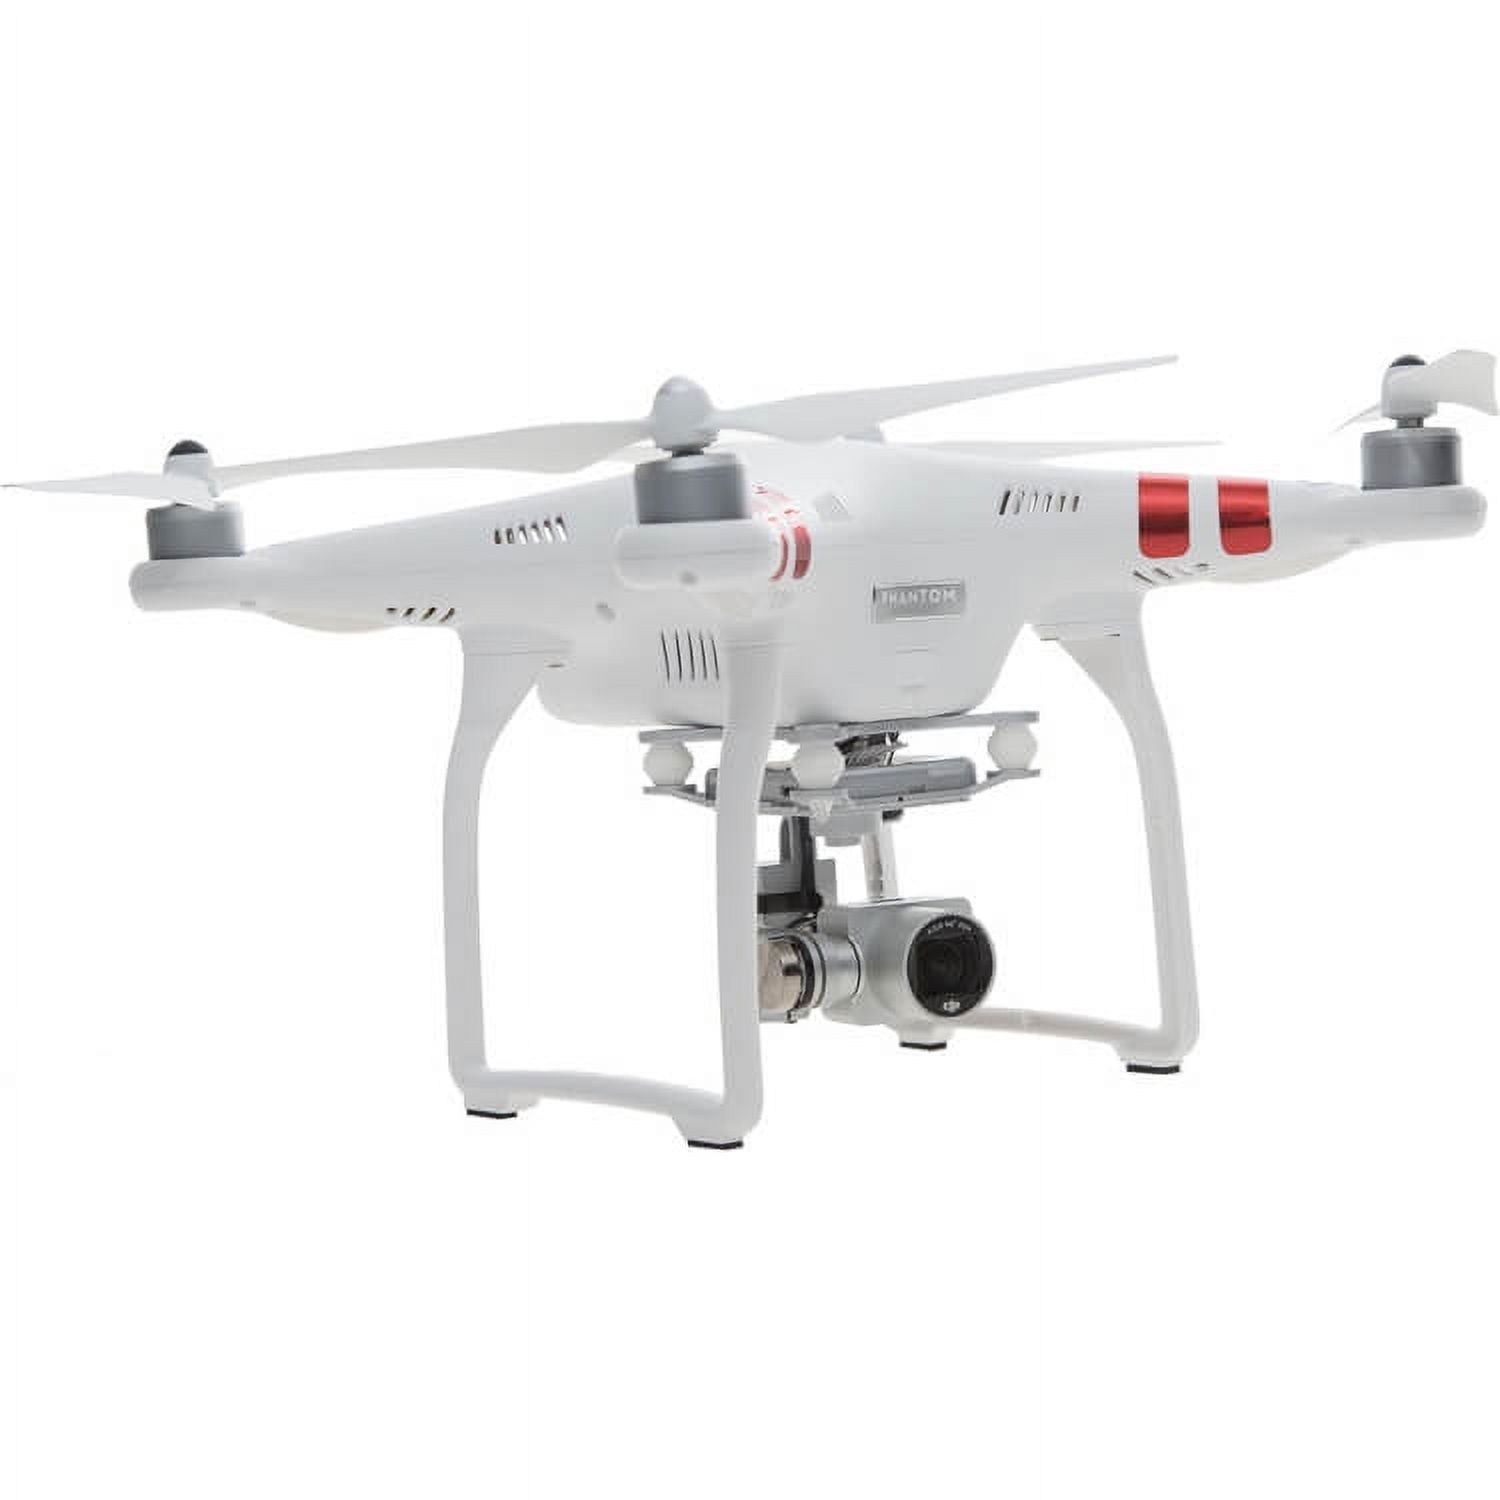 DJI Phantom 3 Standard Drone - image 2 of 3